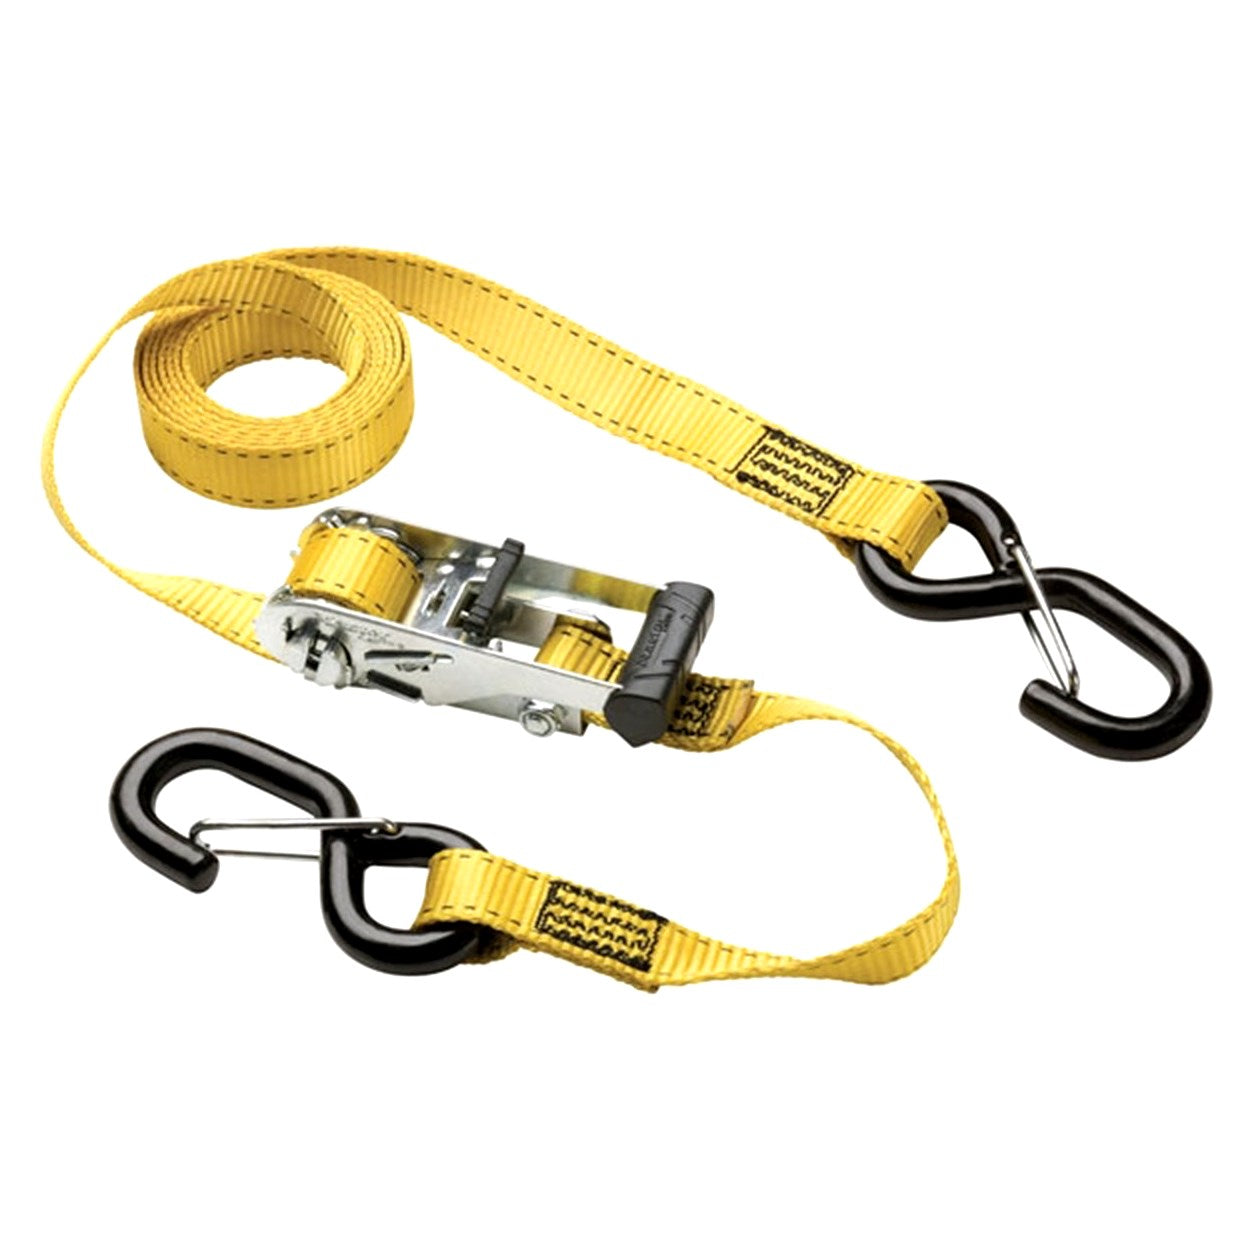 Master Lock Ratchet S Hook Tie Downs 3M - 2 pkt - Premium Ratchet Straps from Masterlock - Just $10.99! Shop now at W Hurst & Son (IW) Ltd